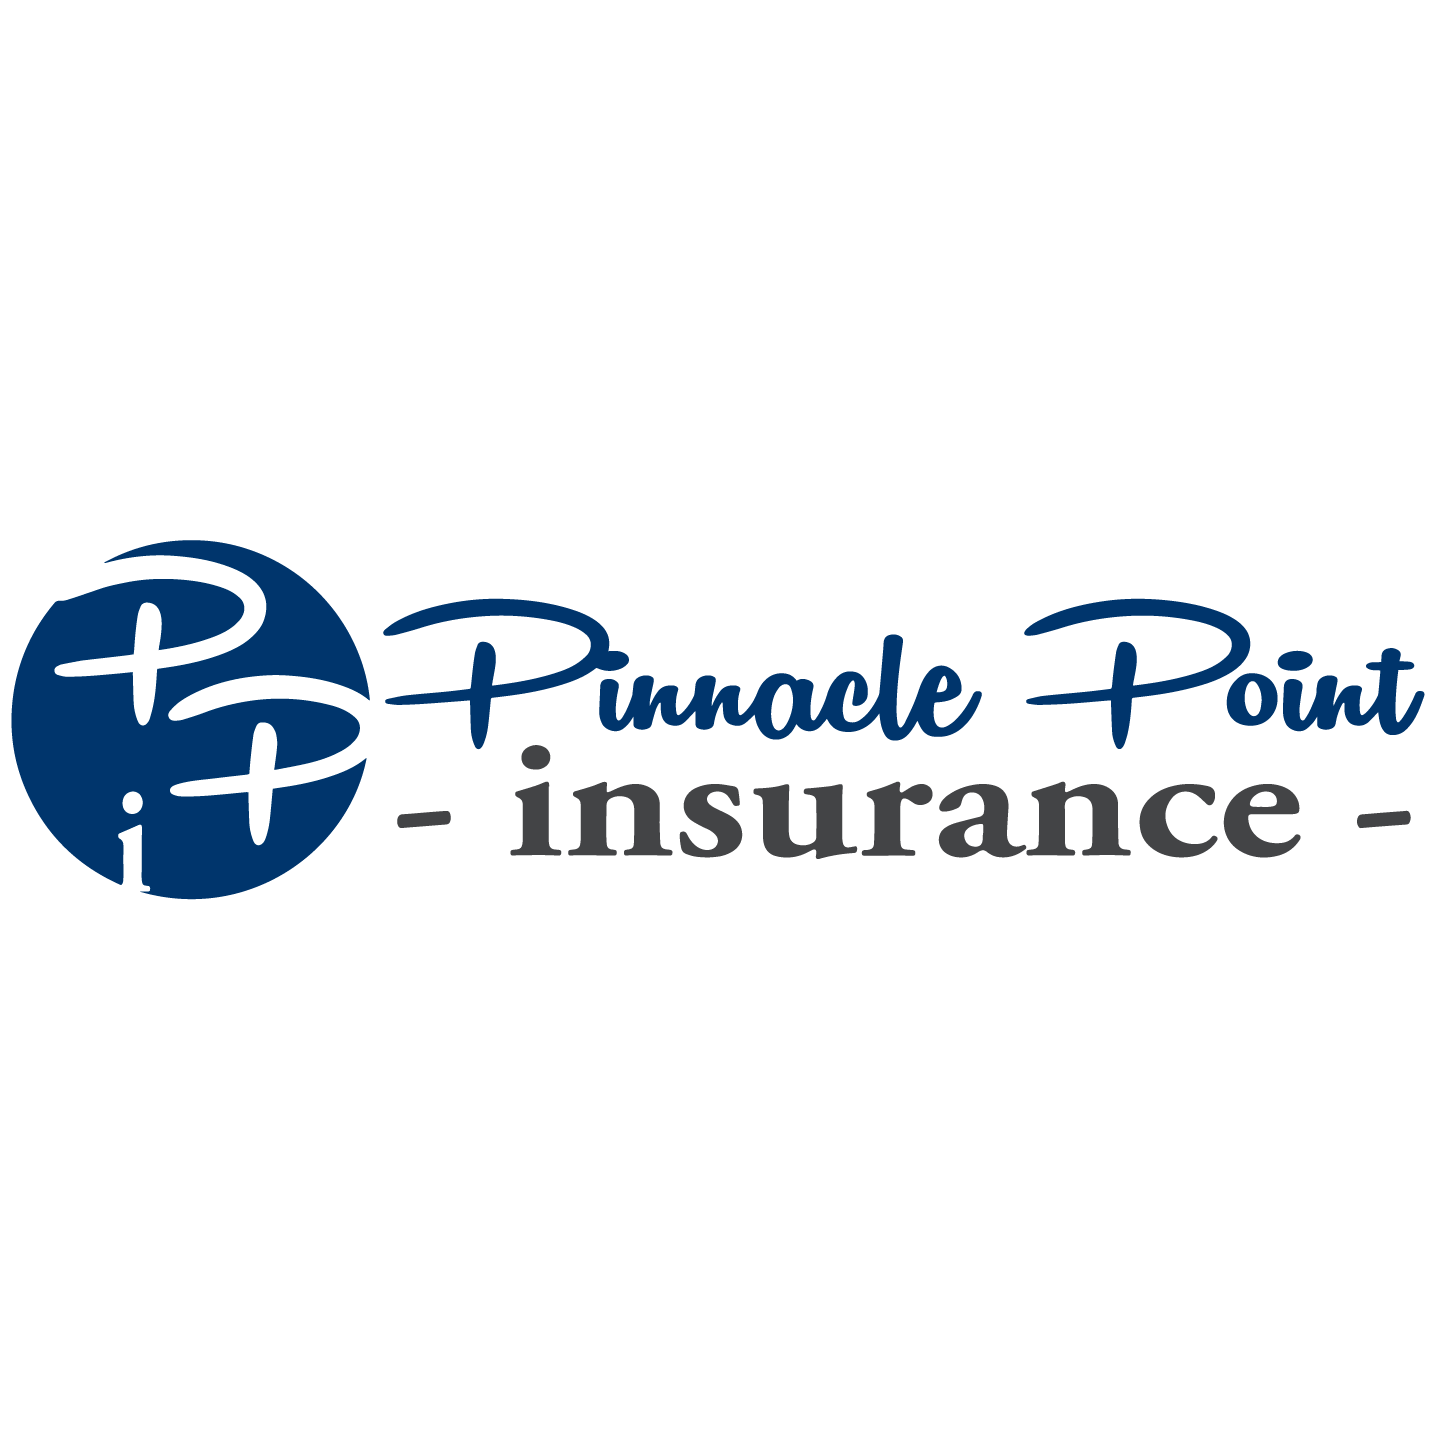 Pinnacle Point Insurance